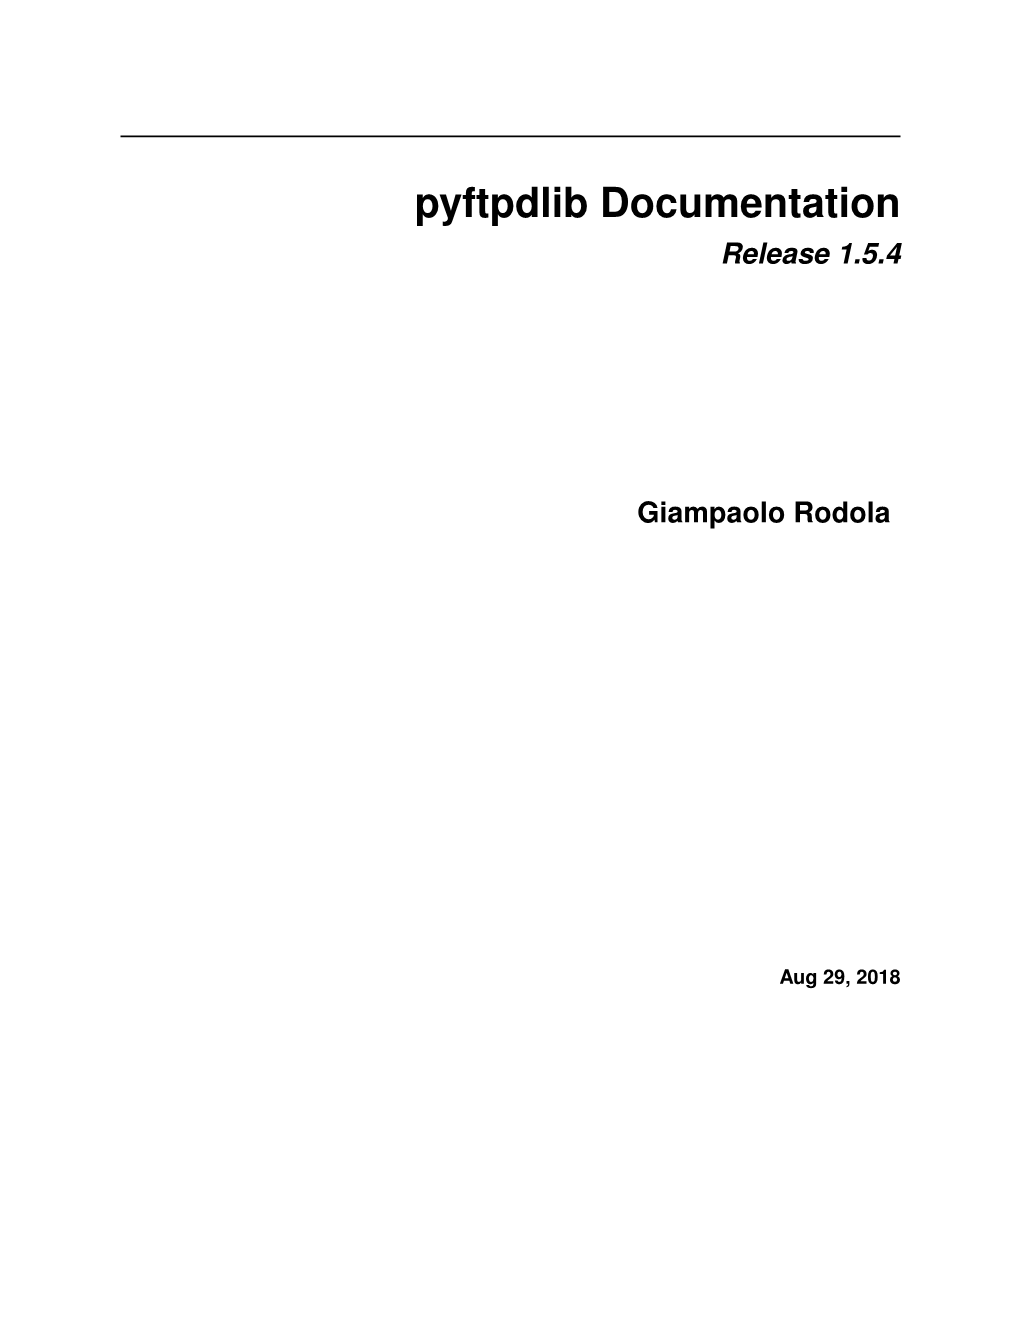 Pyftpdlib Documentation Release 1.5.4